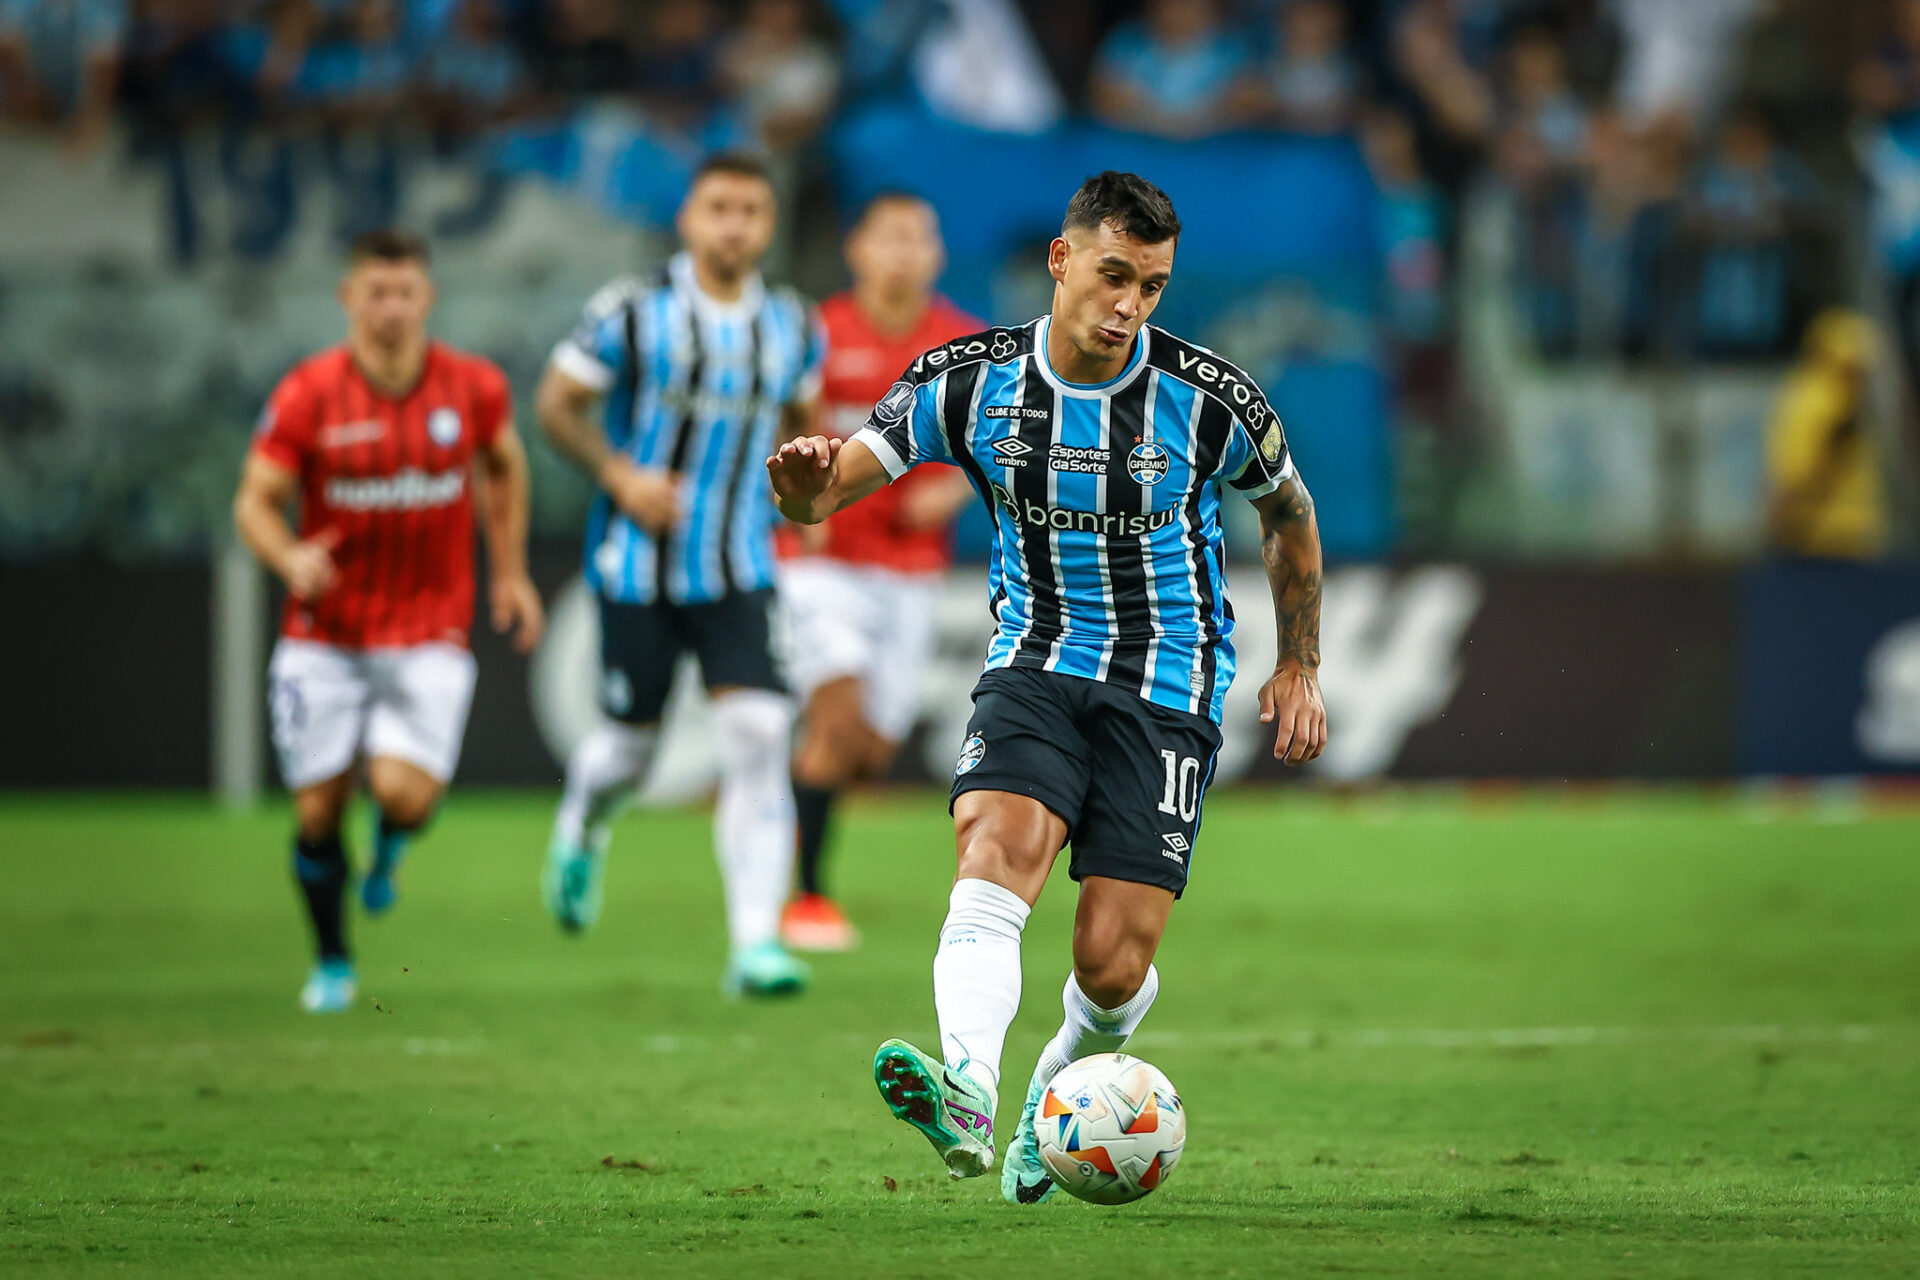 AO VIVO: Grêmio x Athletico-PR pela 2ª rodada do Brasileirão